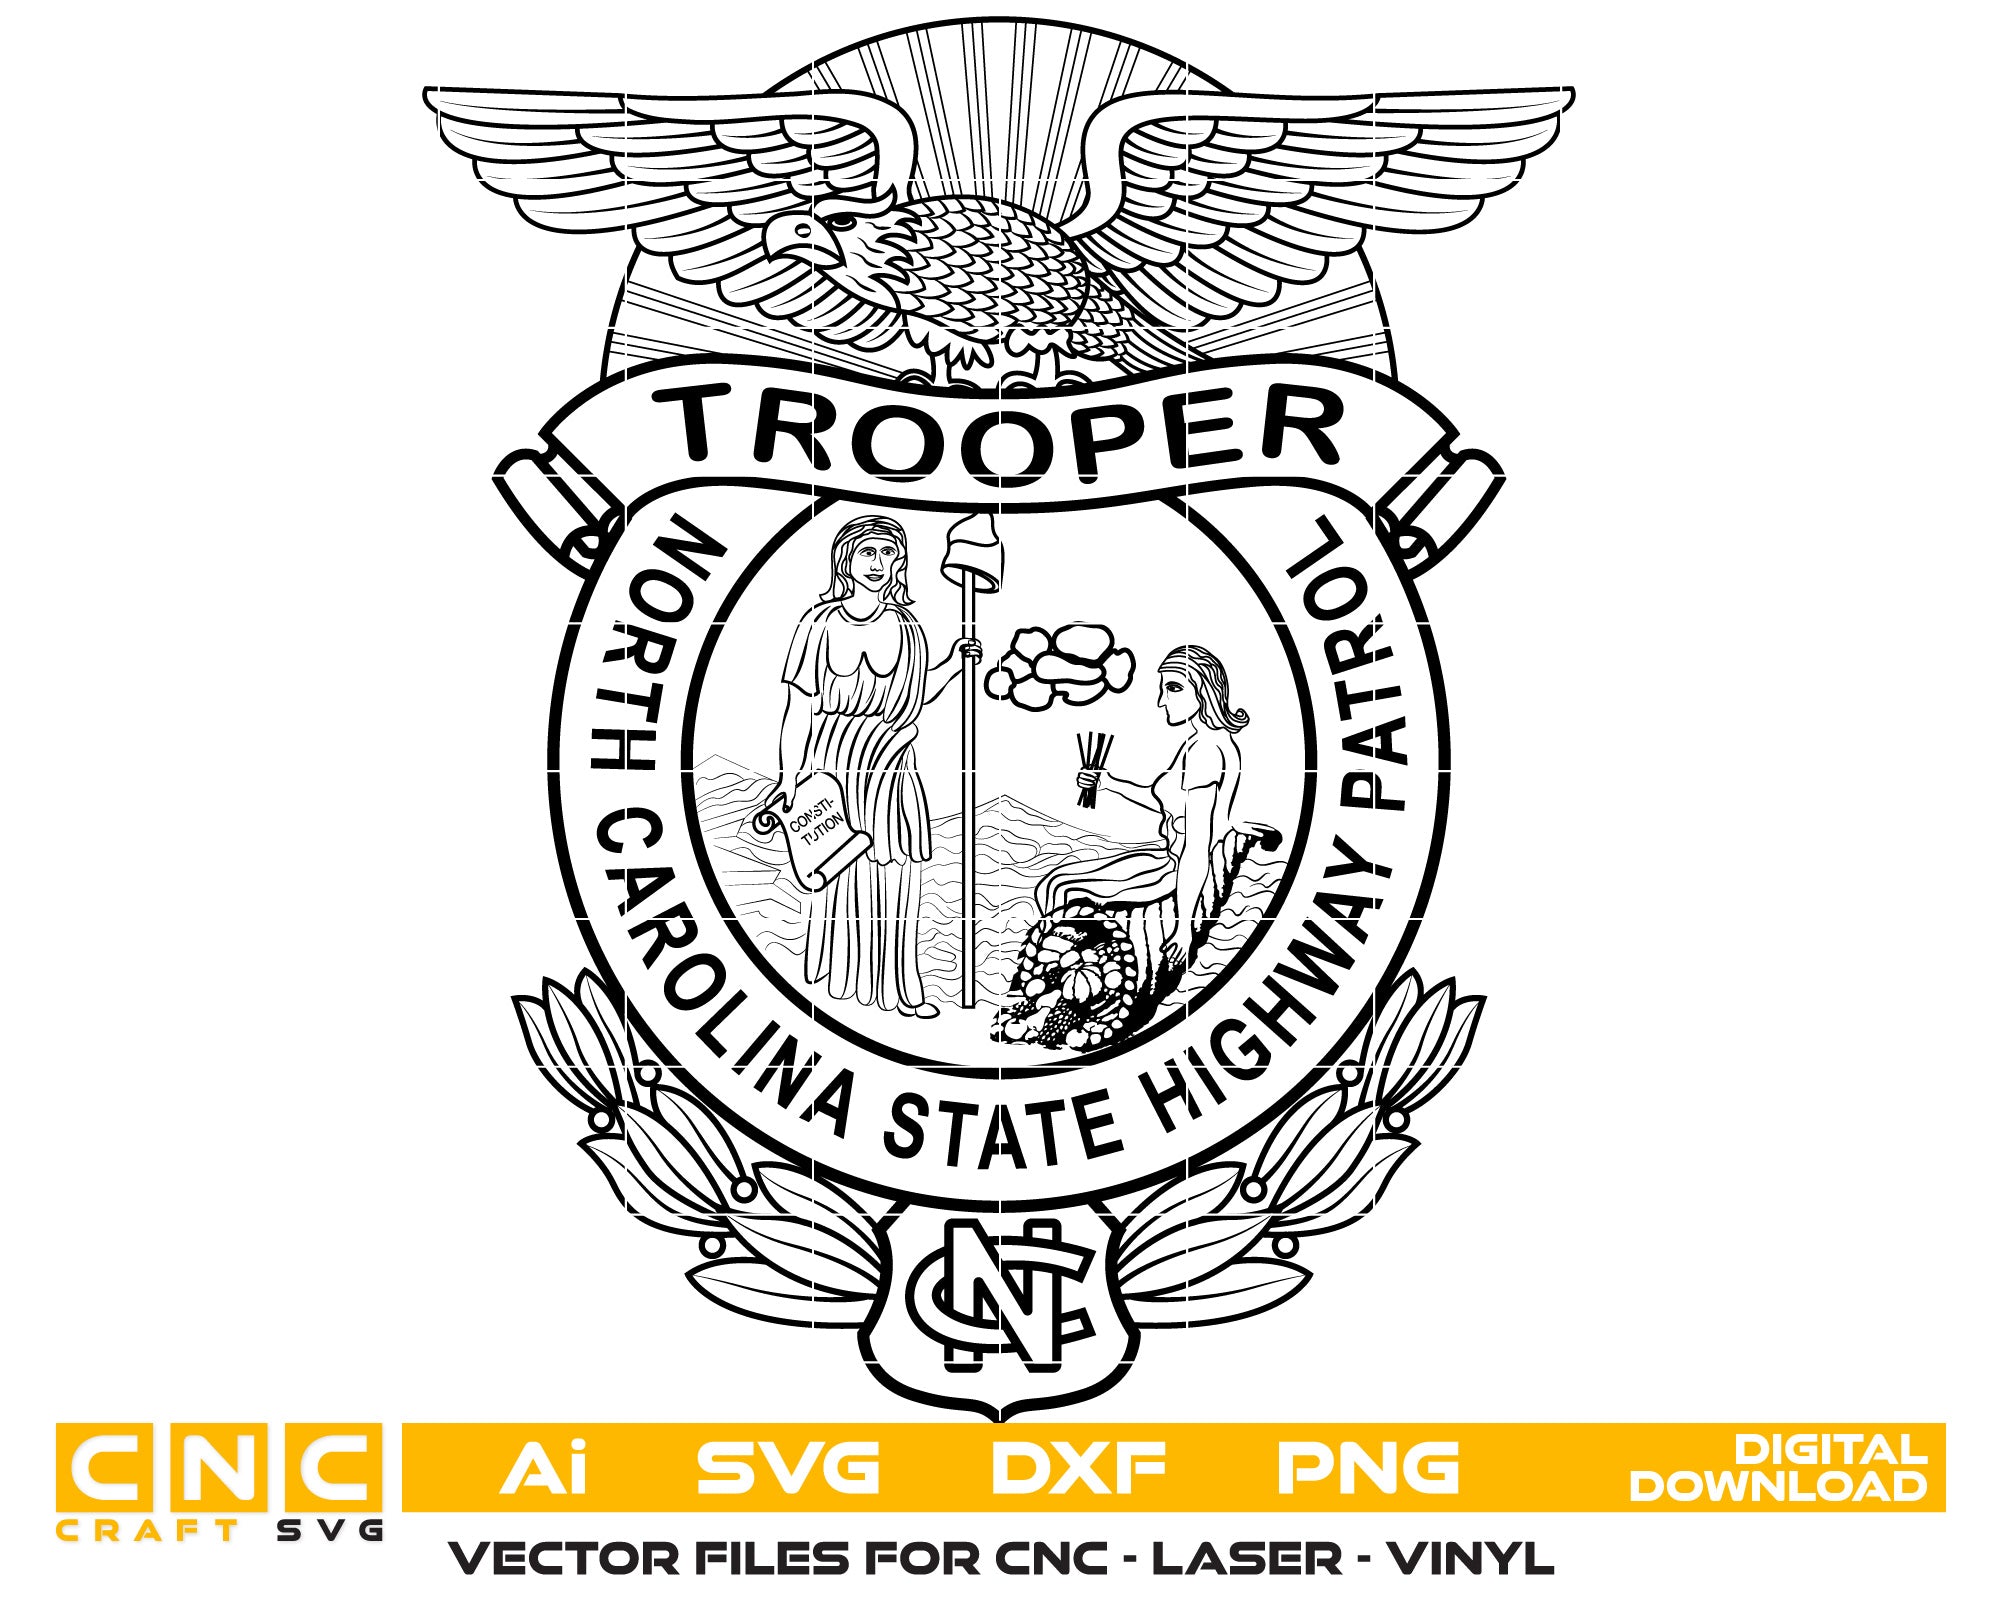 North Carolina State Highway Patrol Trooper Badge Vector Art, Ai,SVG, DXF, PNG, Digital Files